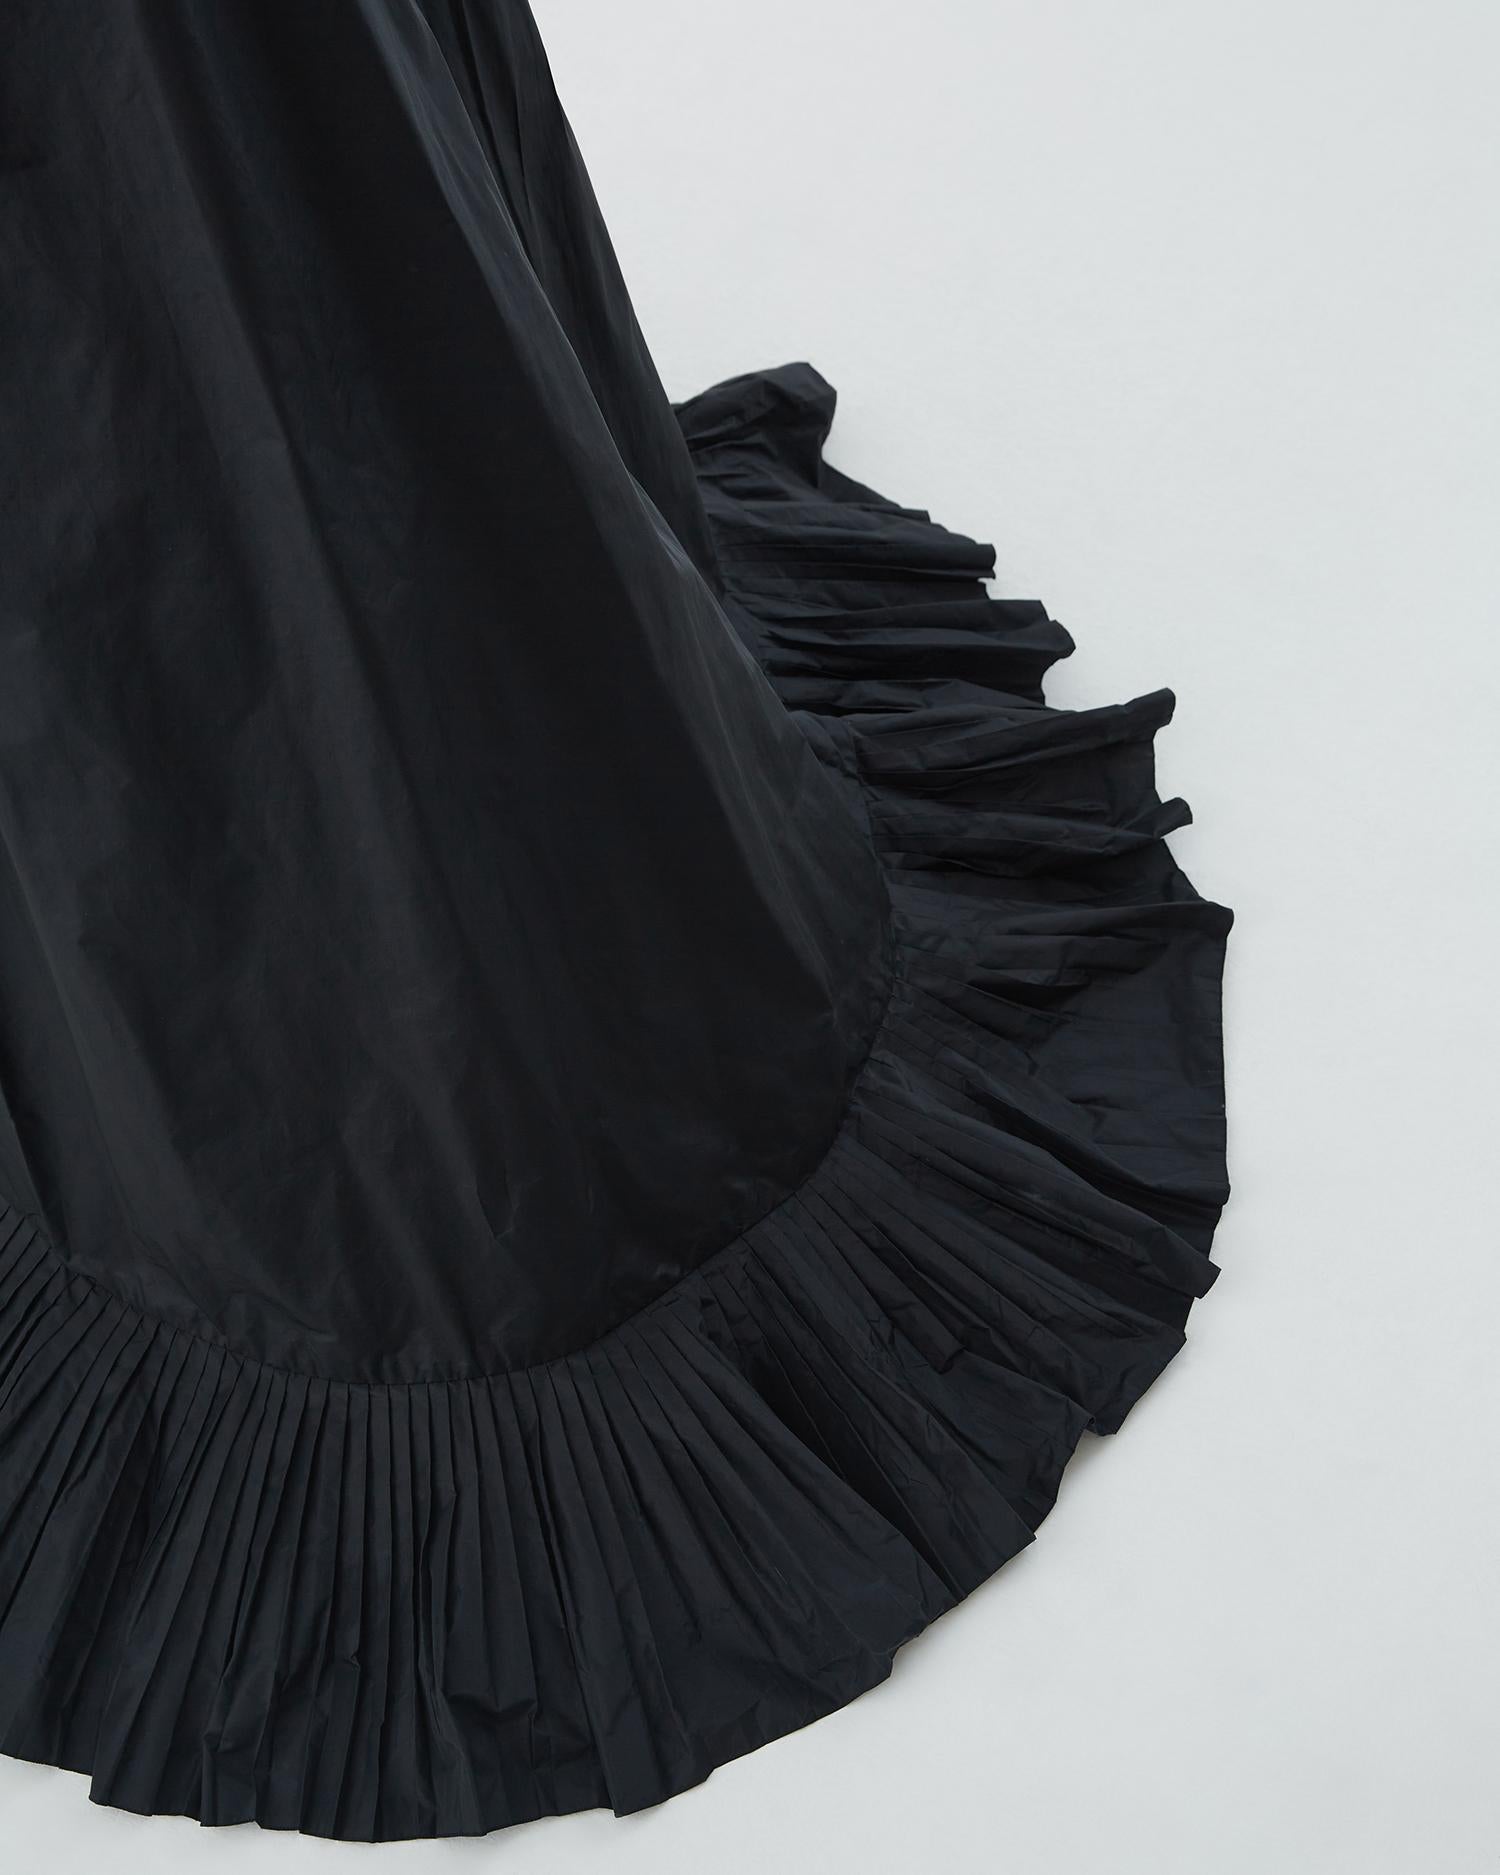 Gianfranco Ferrè F/W 2000 black plated  taffeta skirt and white silk blouse set For Sale 8